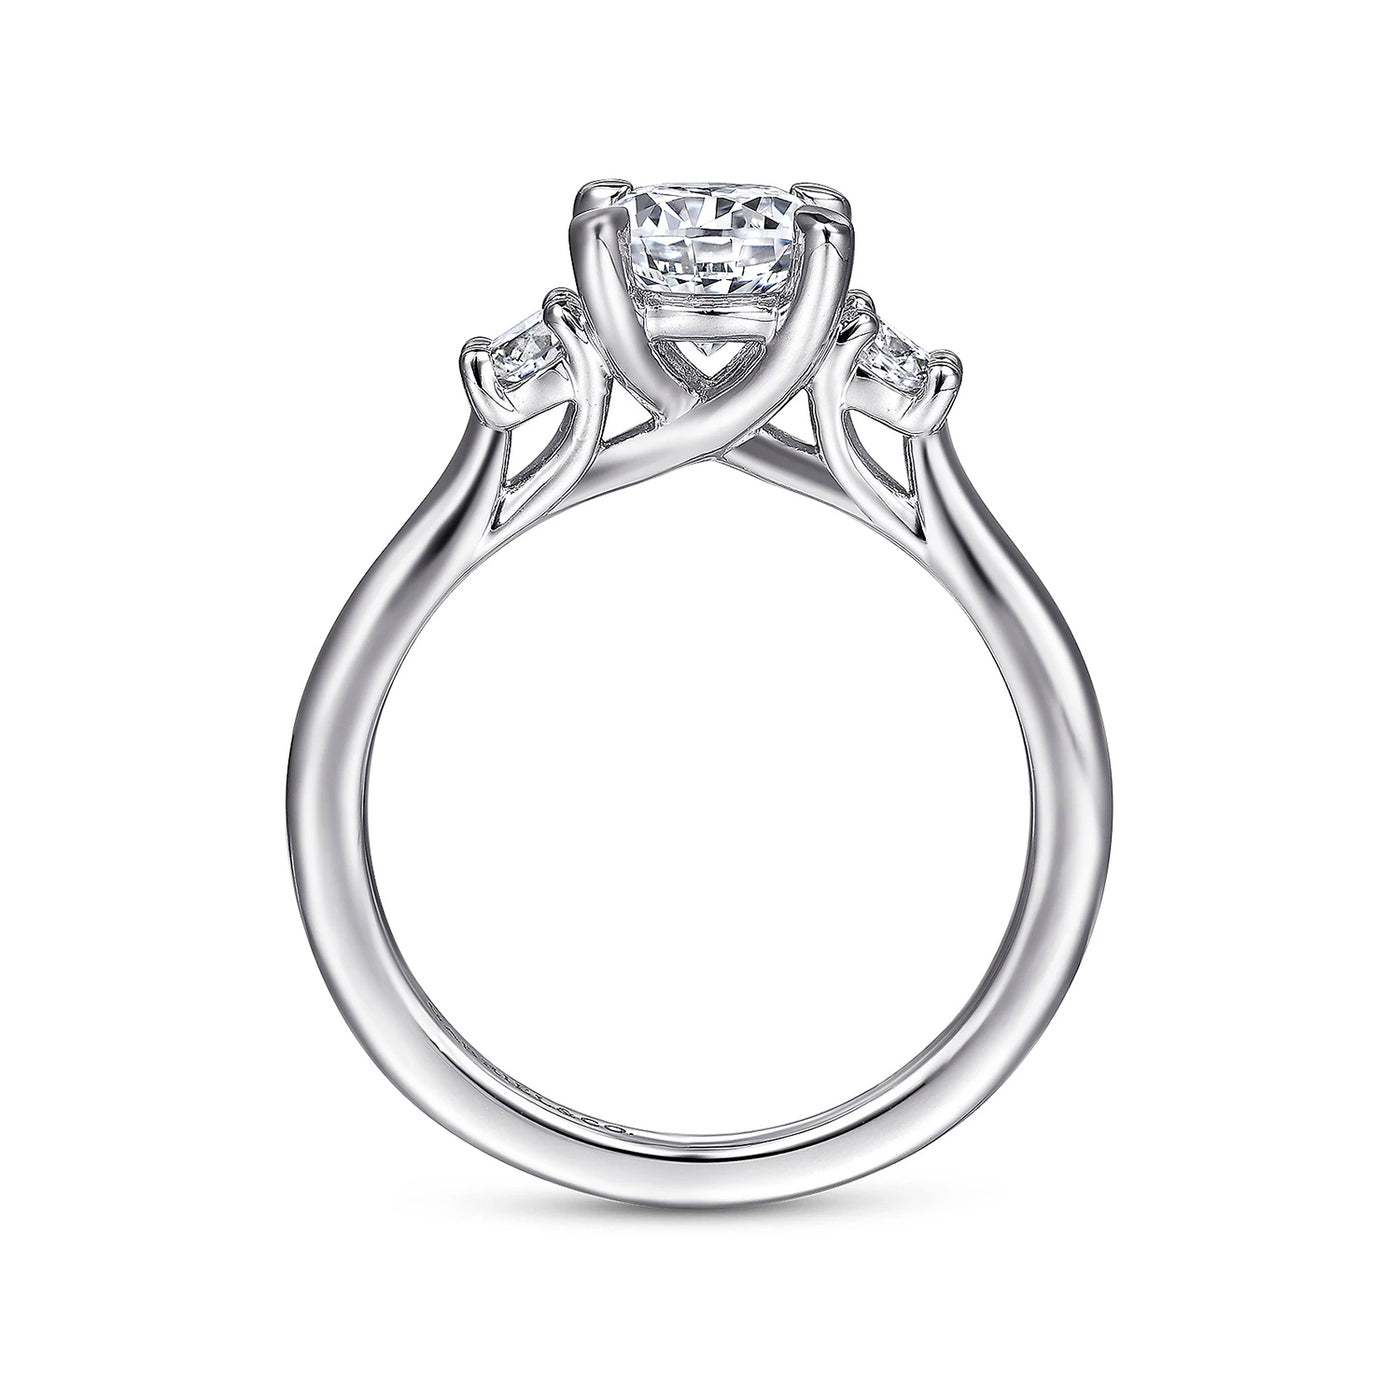 Gabriel & Co. 14k White Gold Three Stone Diamond Semi-Mount Engagement Ring – ER14745R4W44JJ.CSCZ